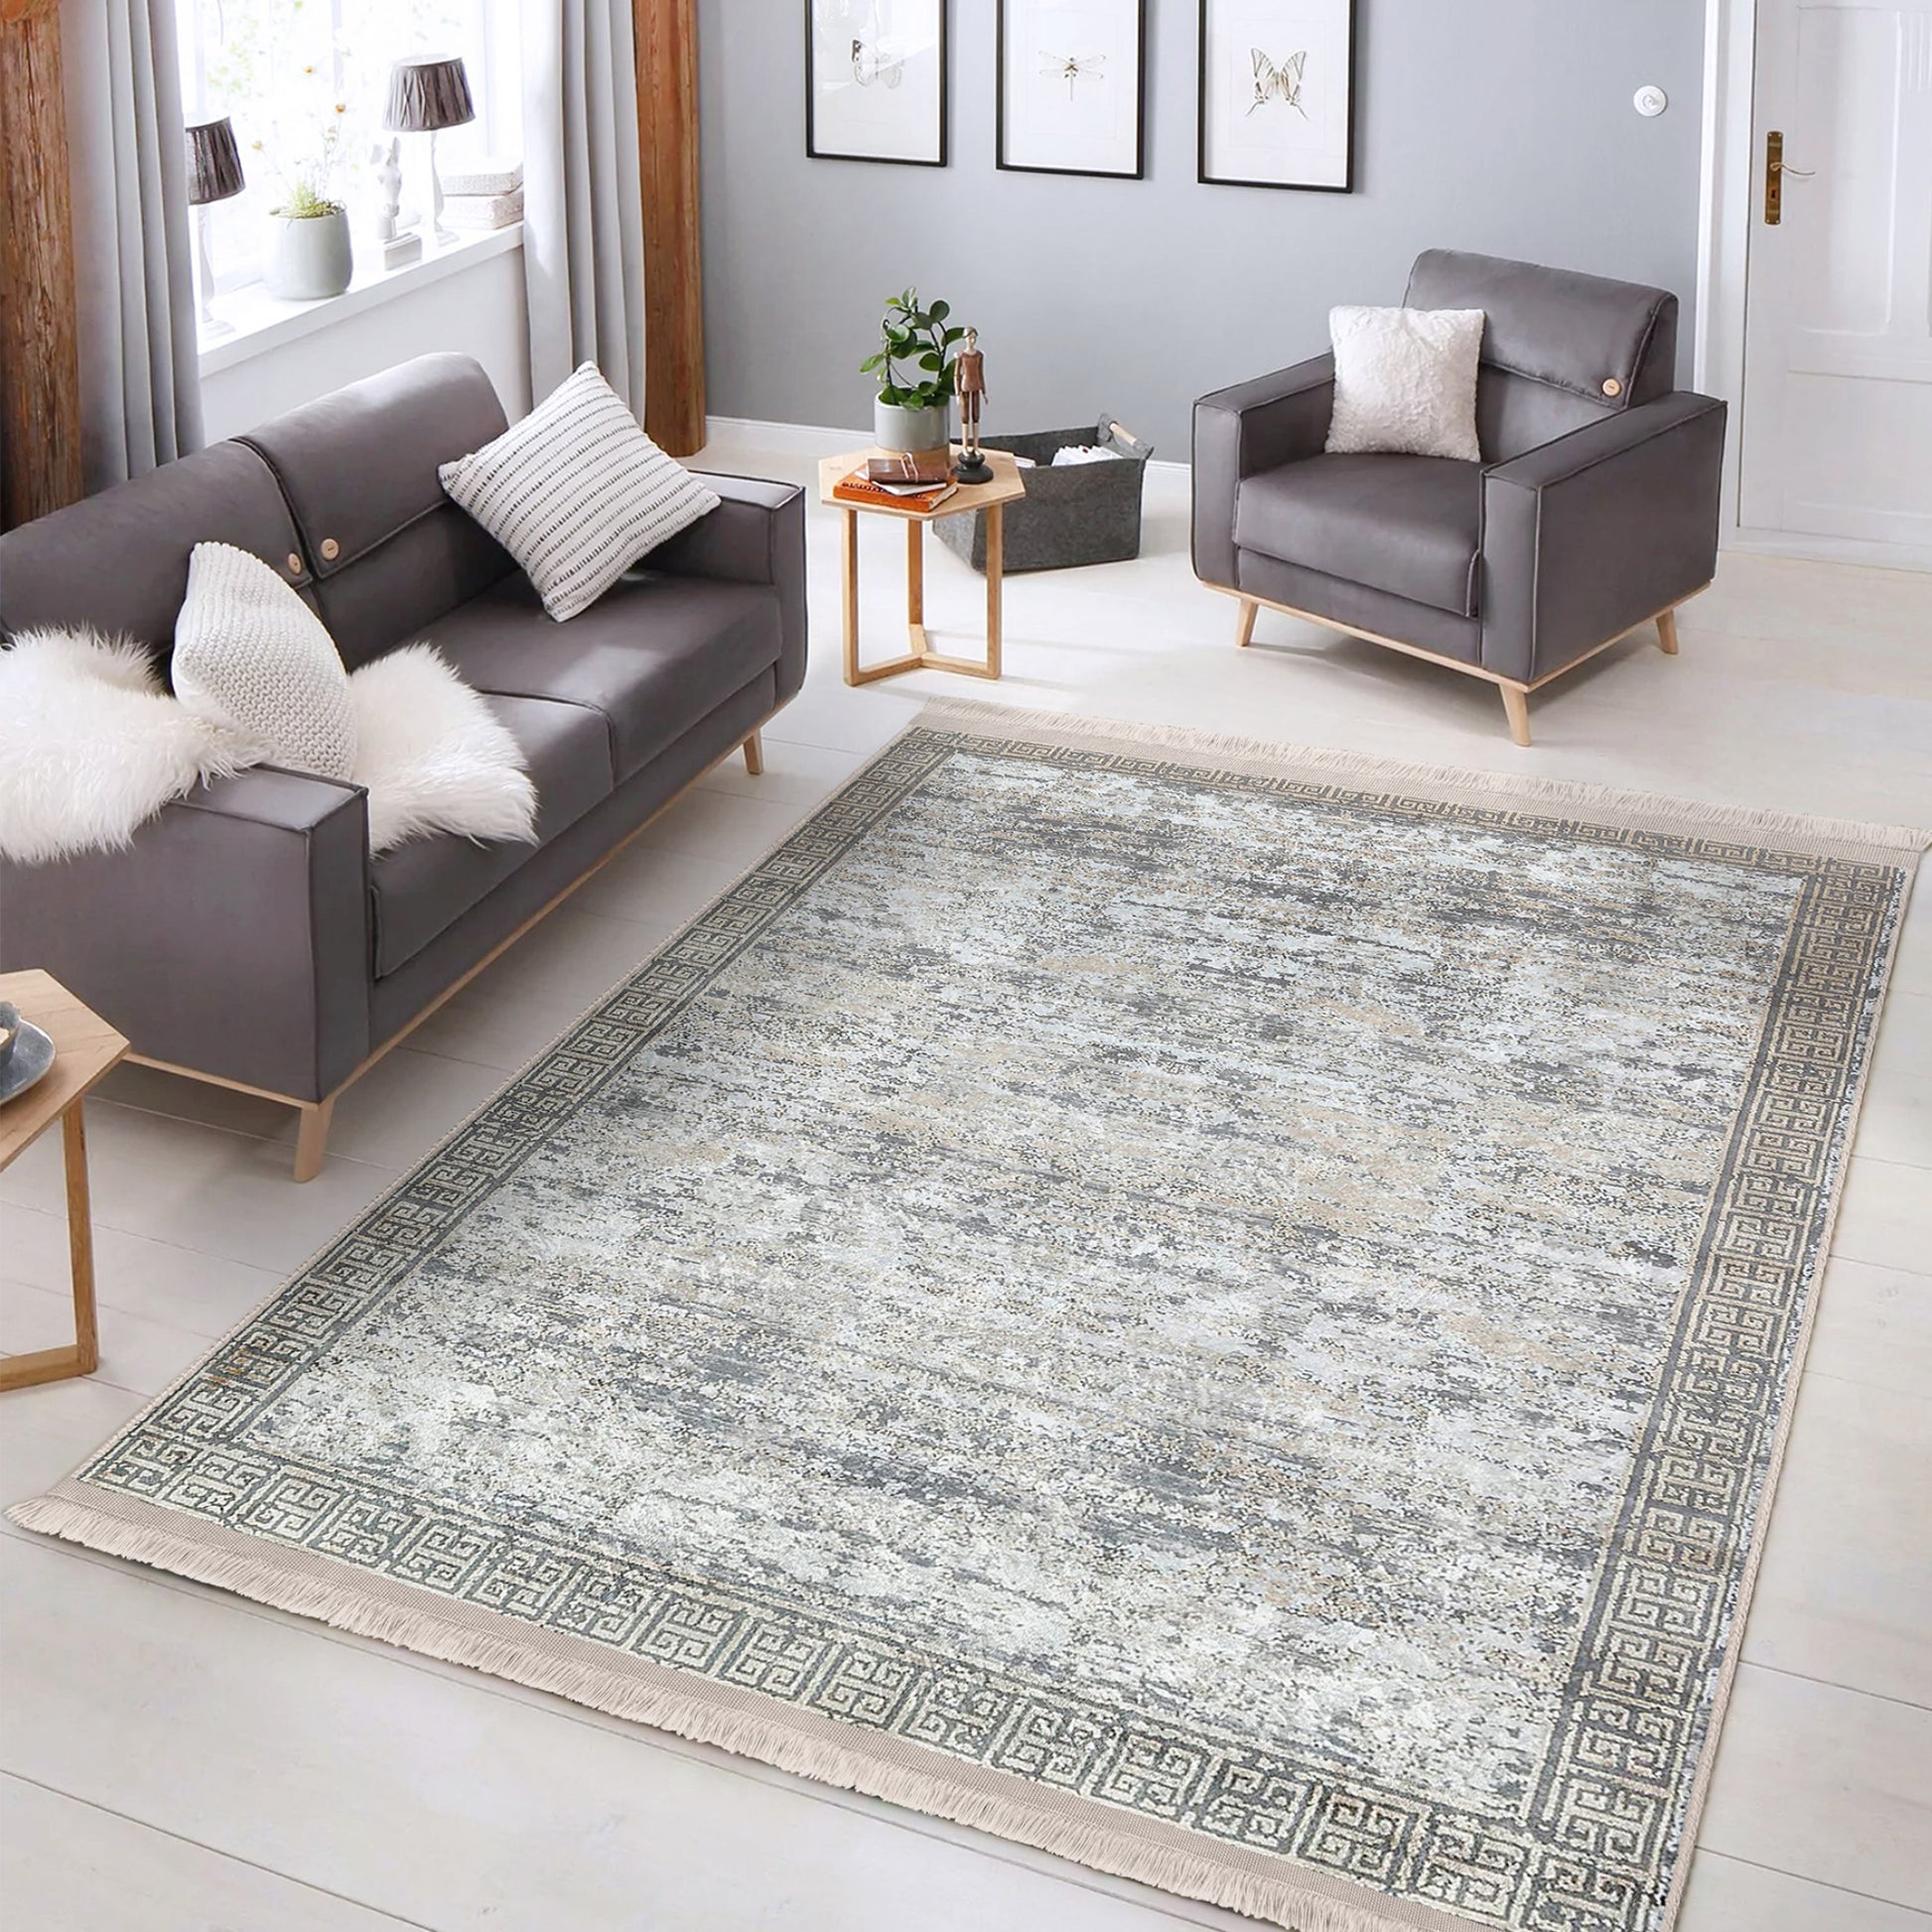 Timeless Grey Living Room Carpet - Stylish Design